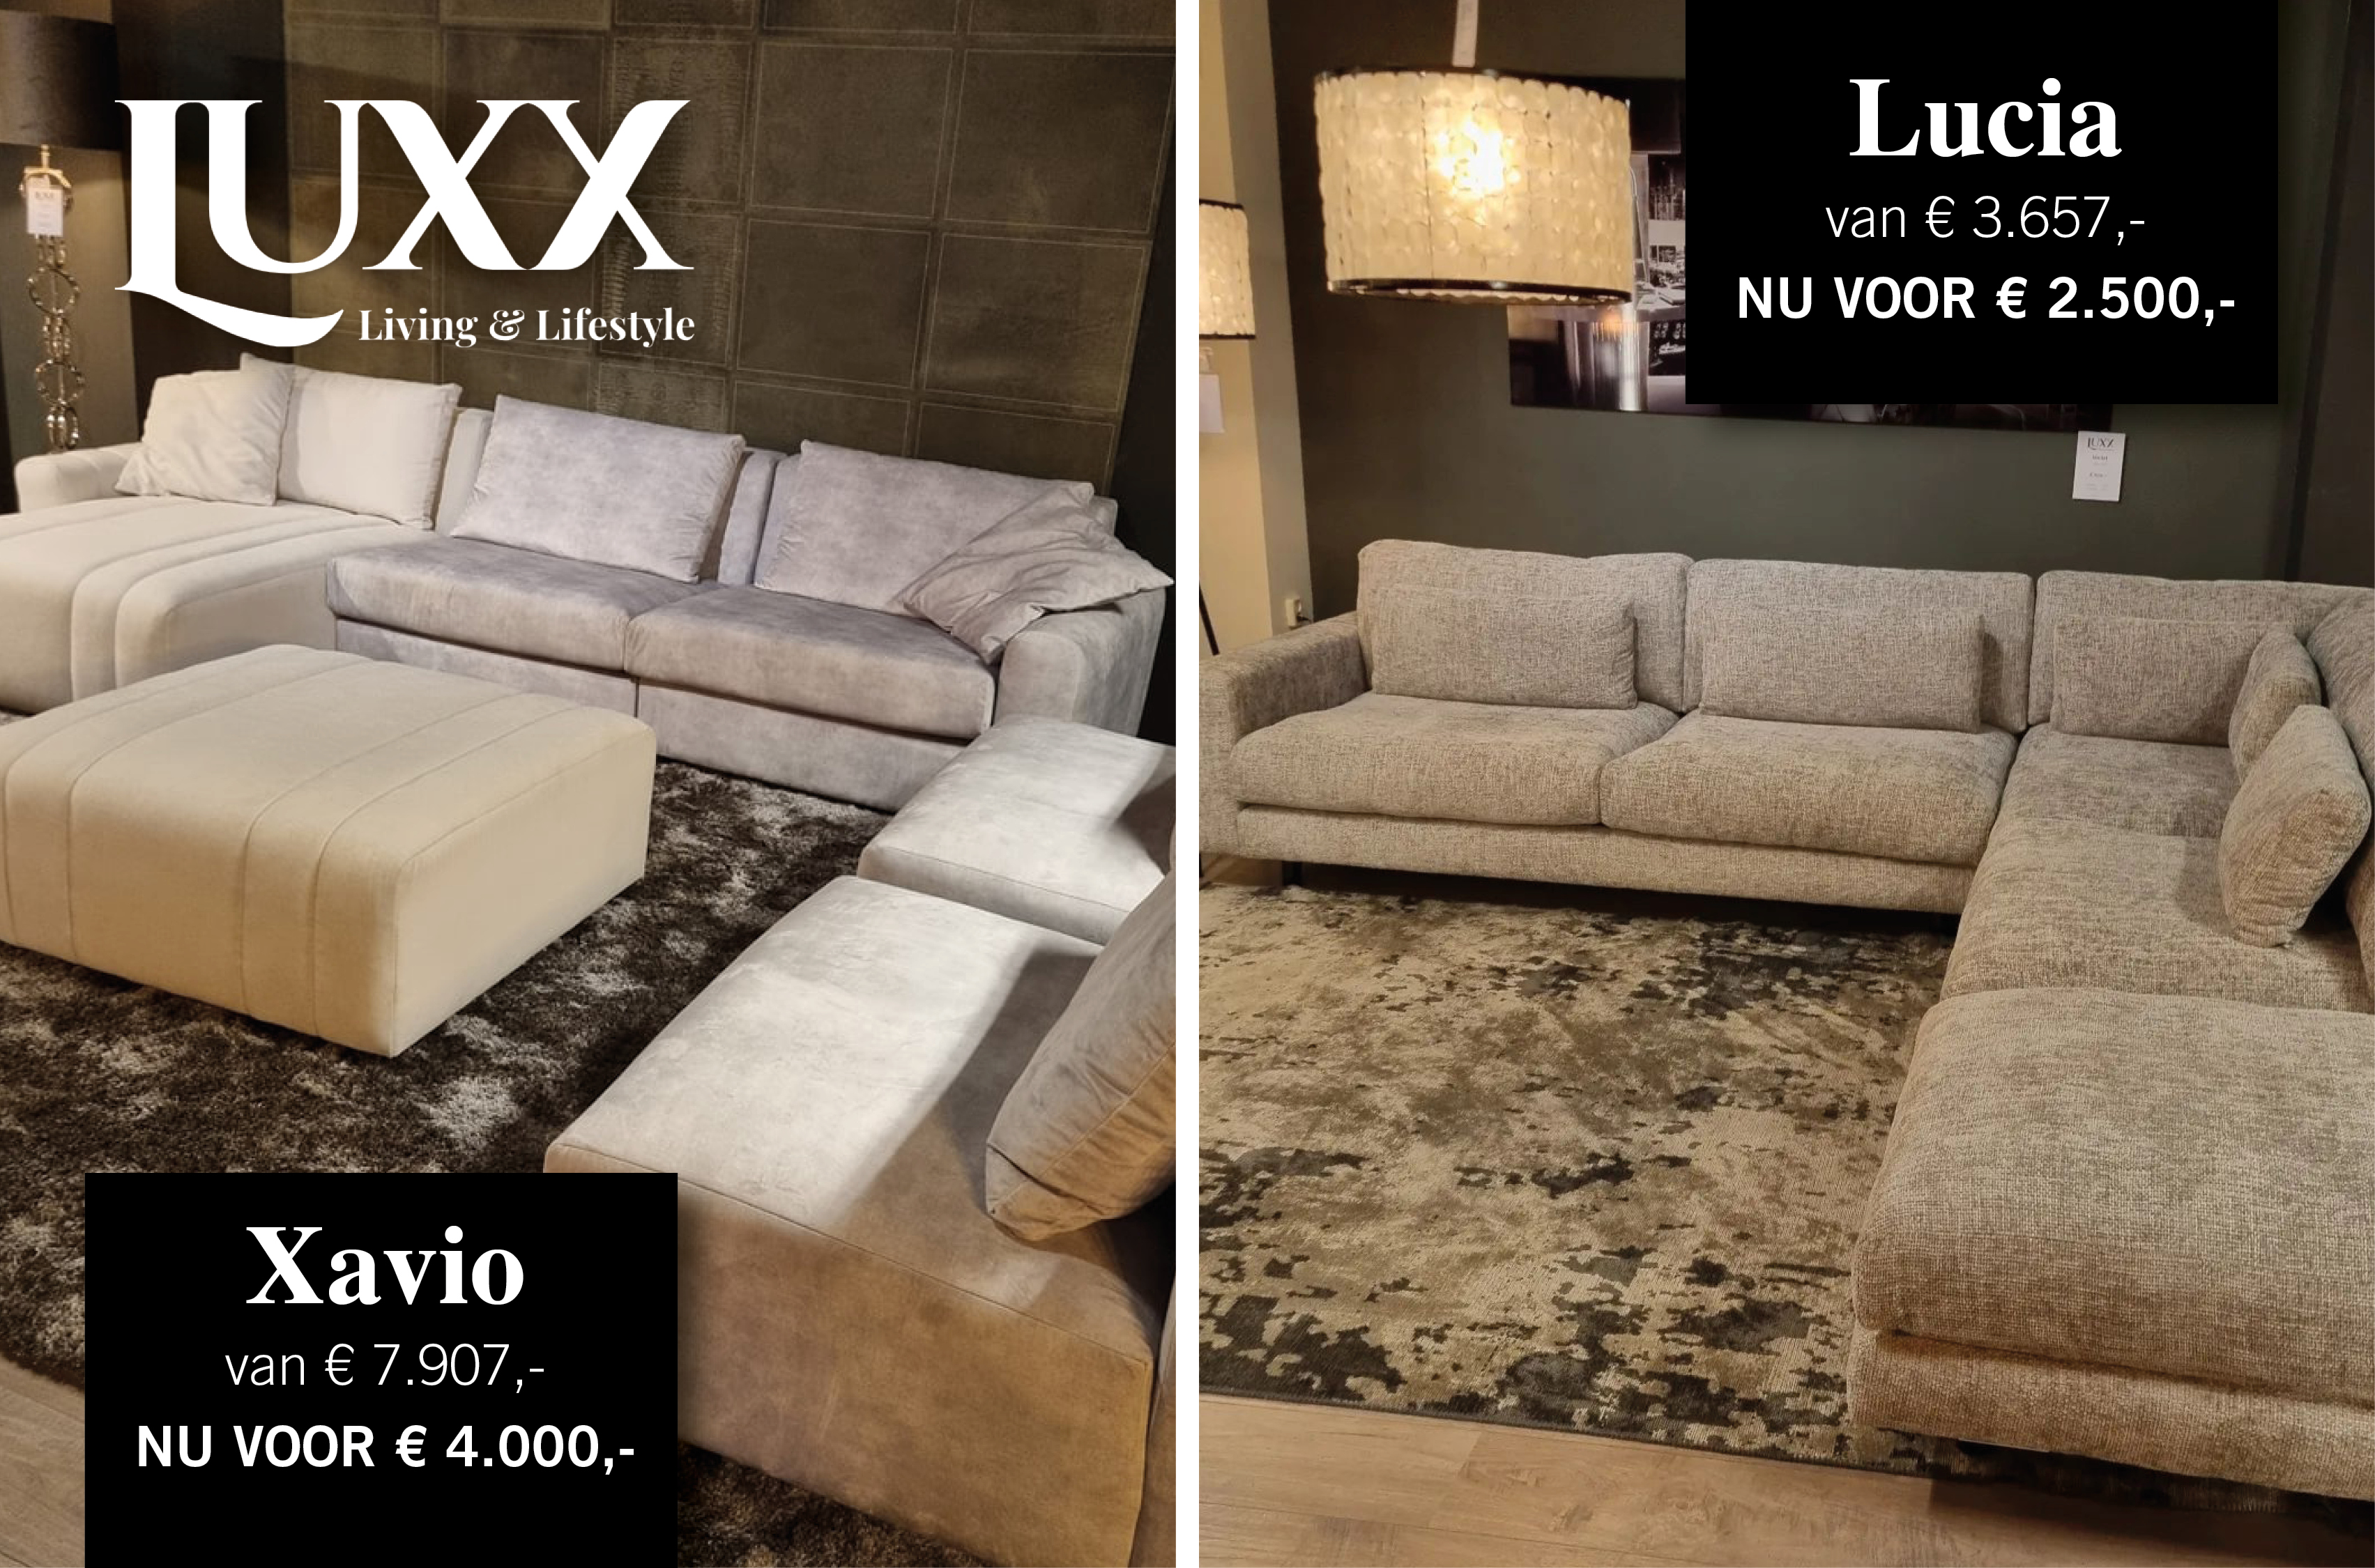 Luxx Living & Lifestyle ruimt op!